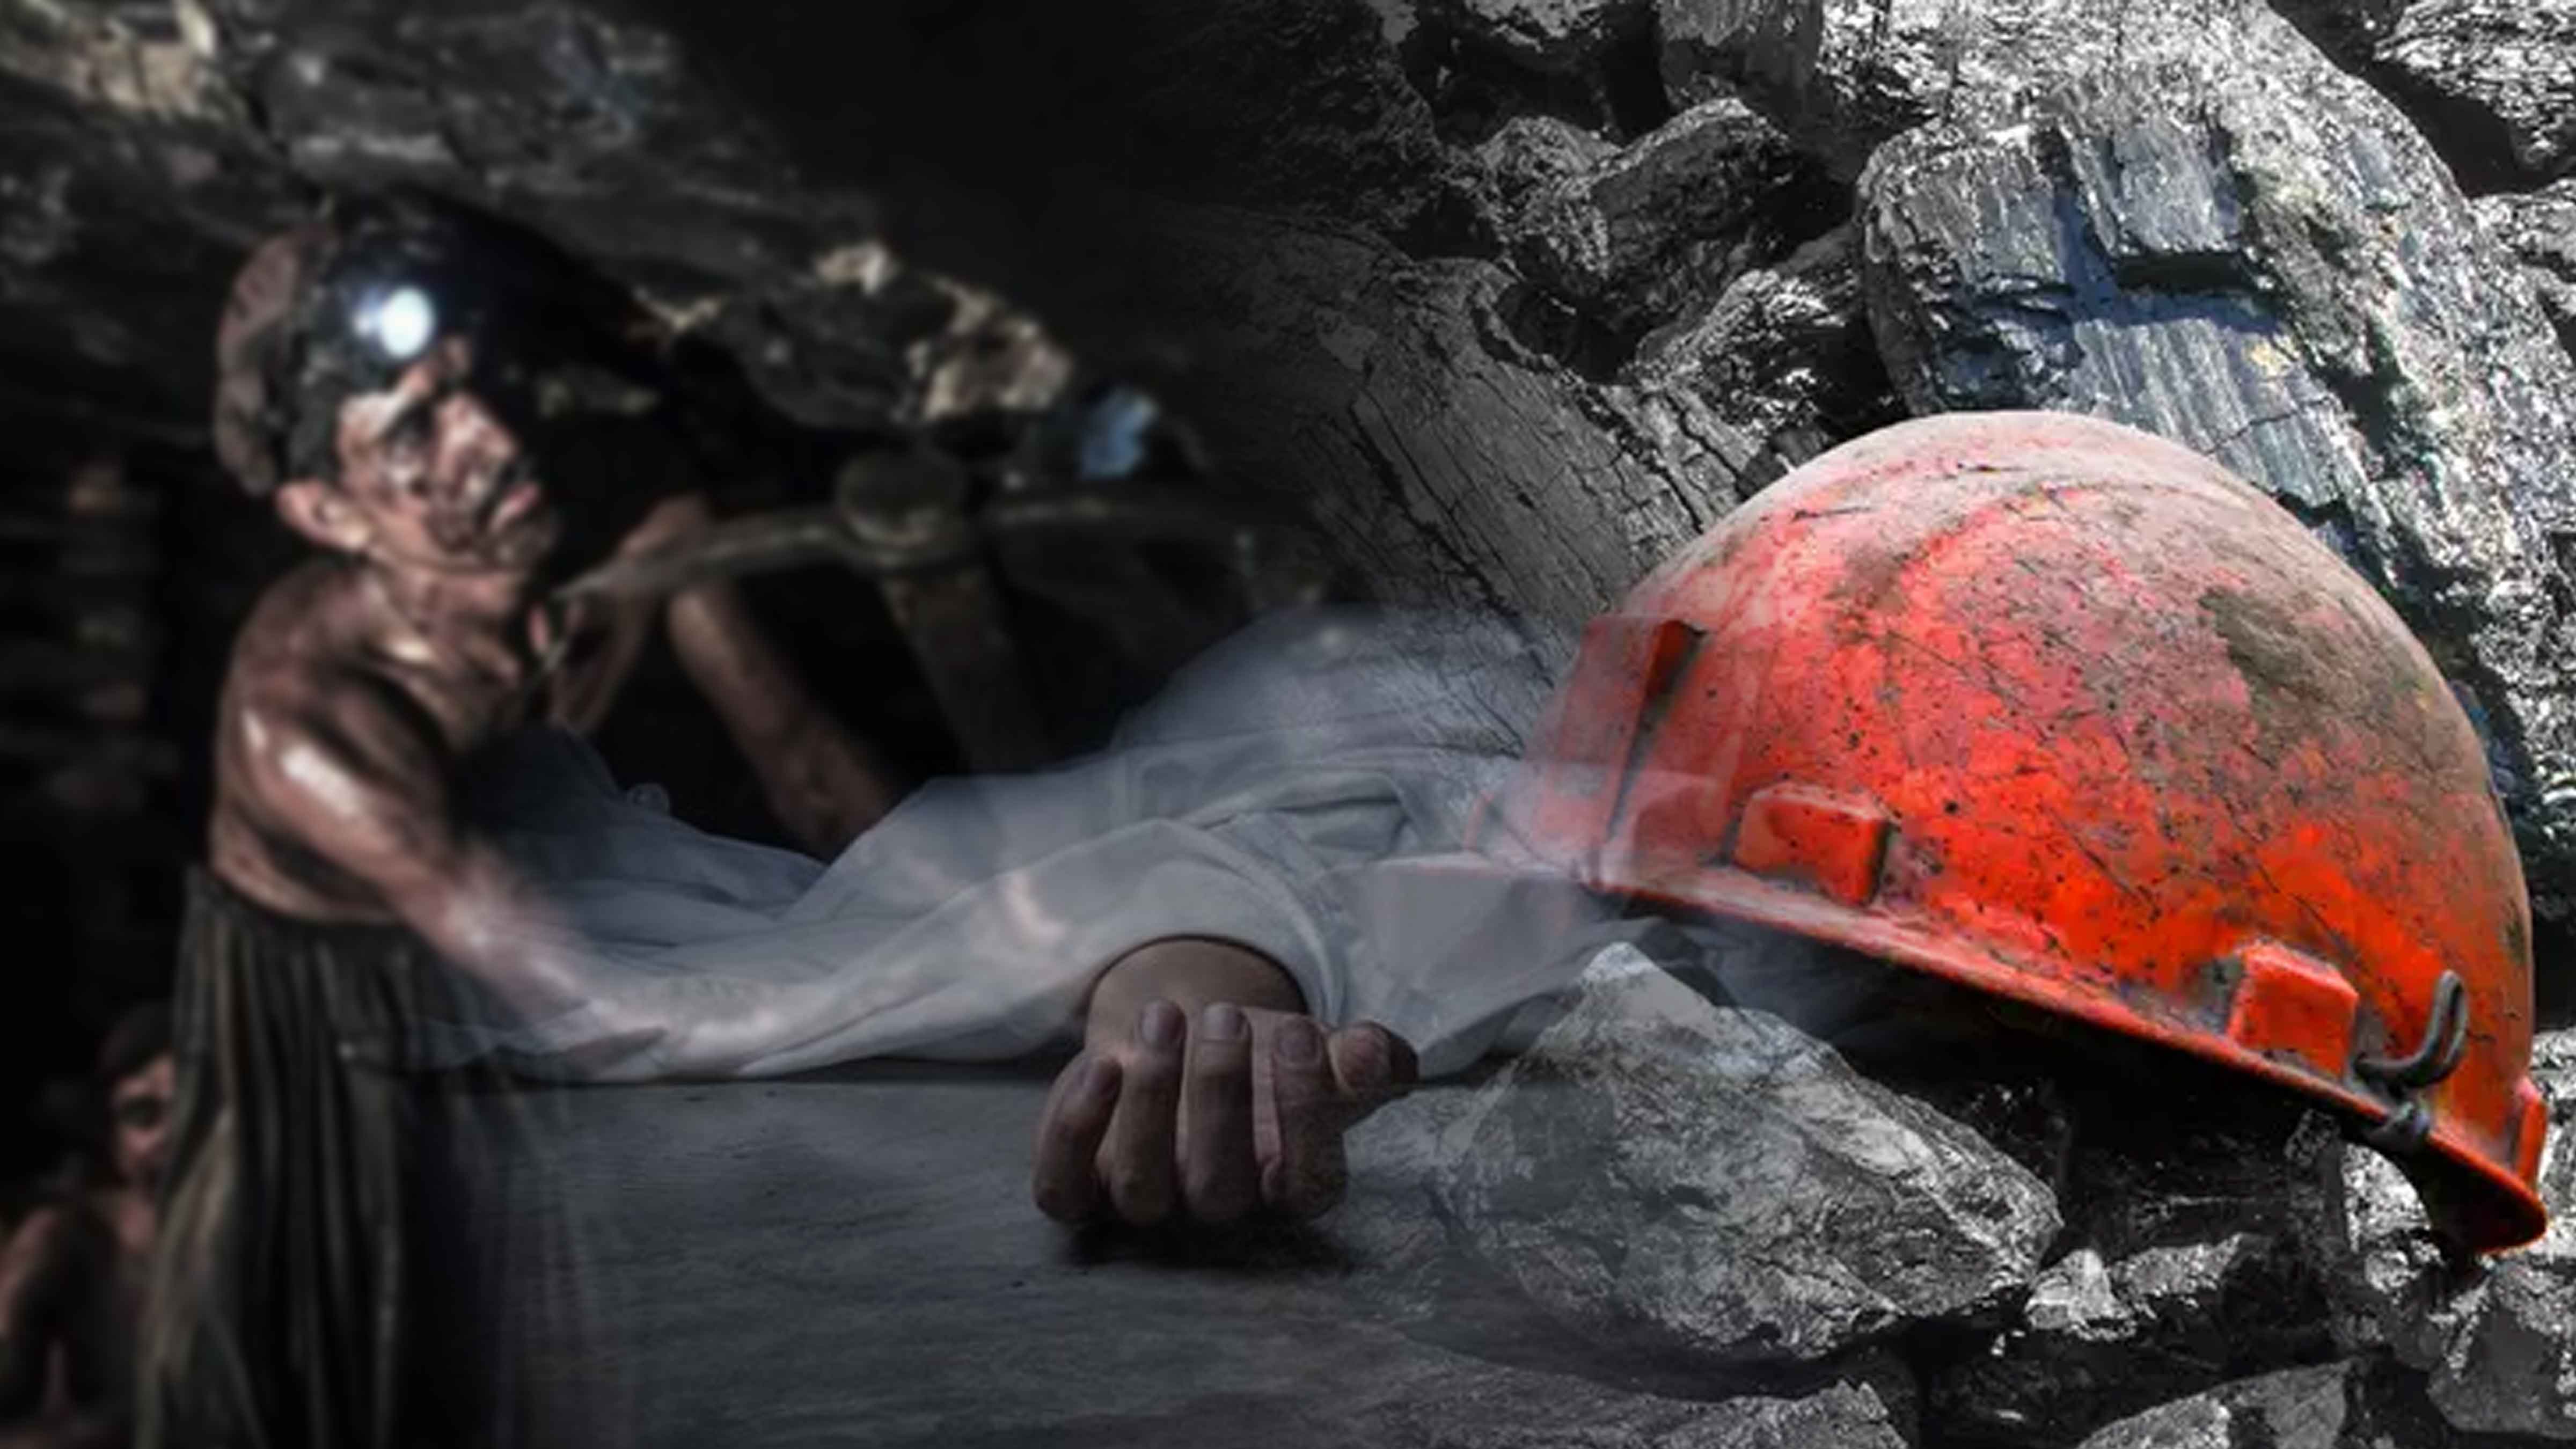 Balochistan Mining Tragedy: 11 Dead, Many More at Riskimage